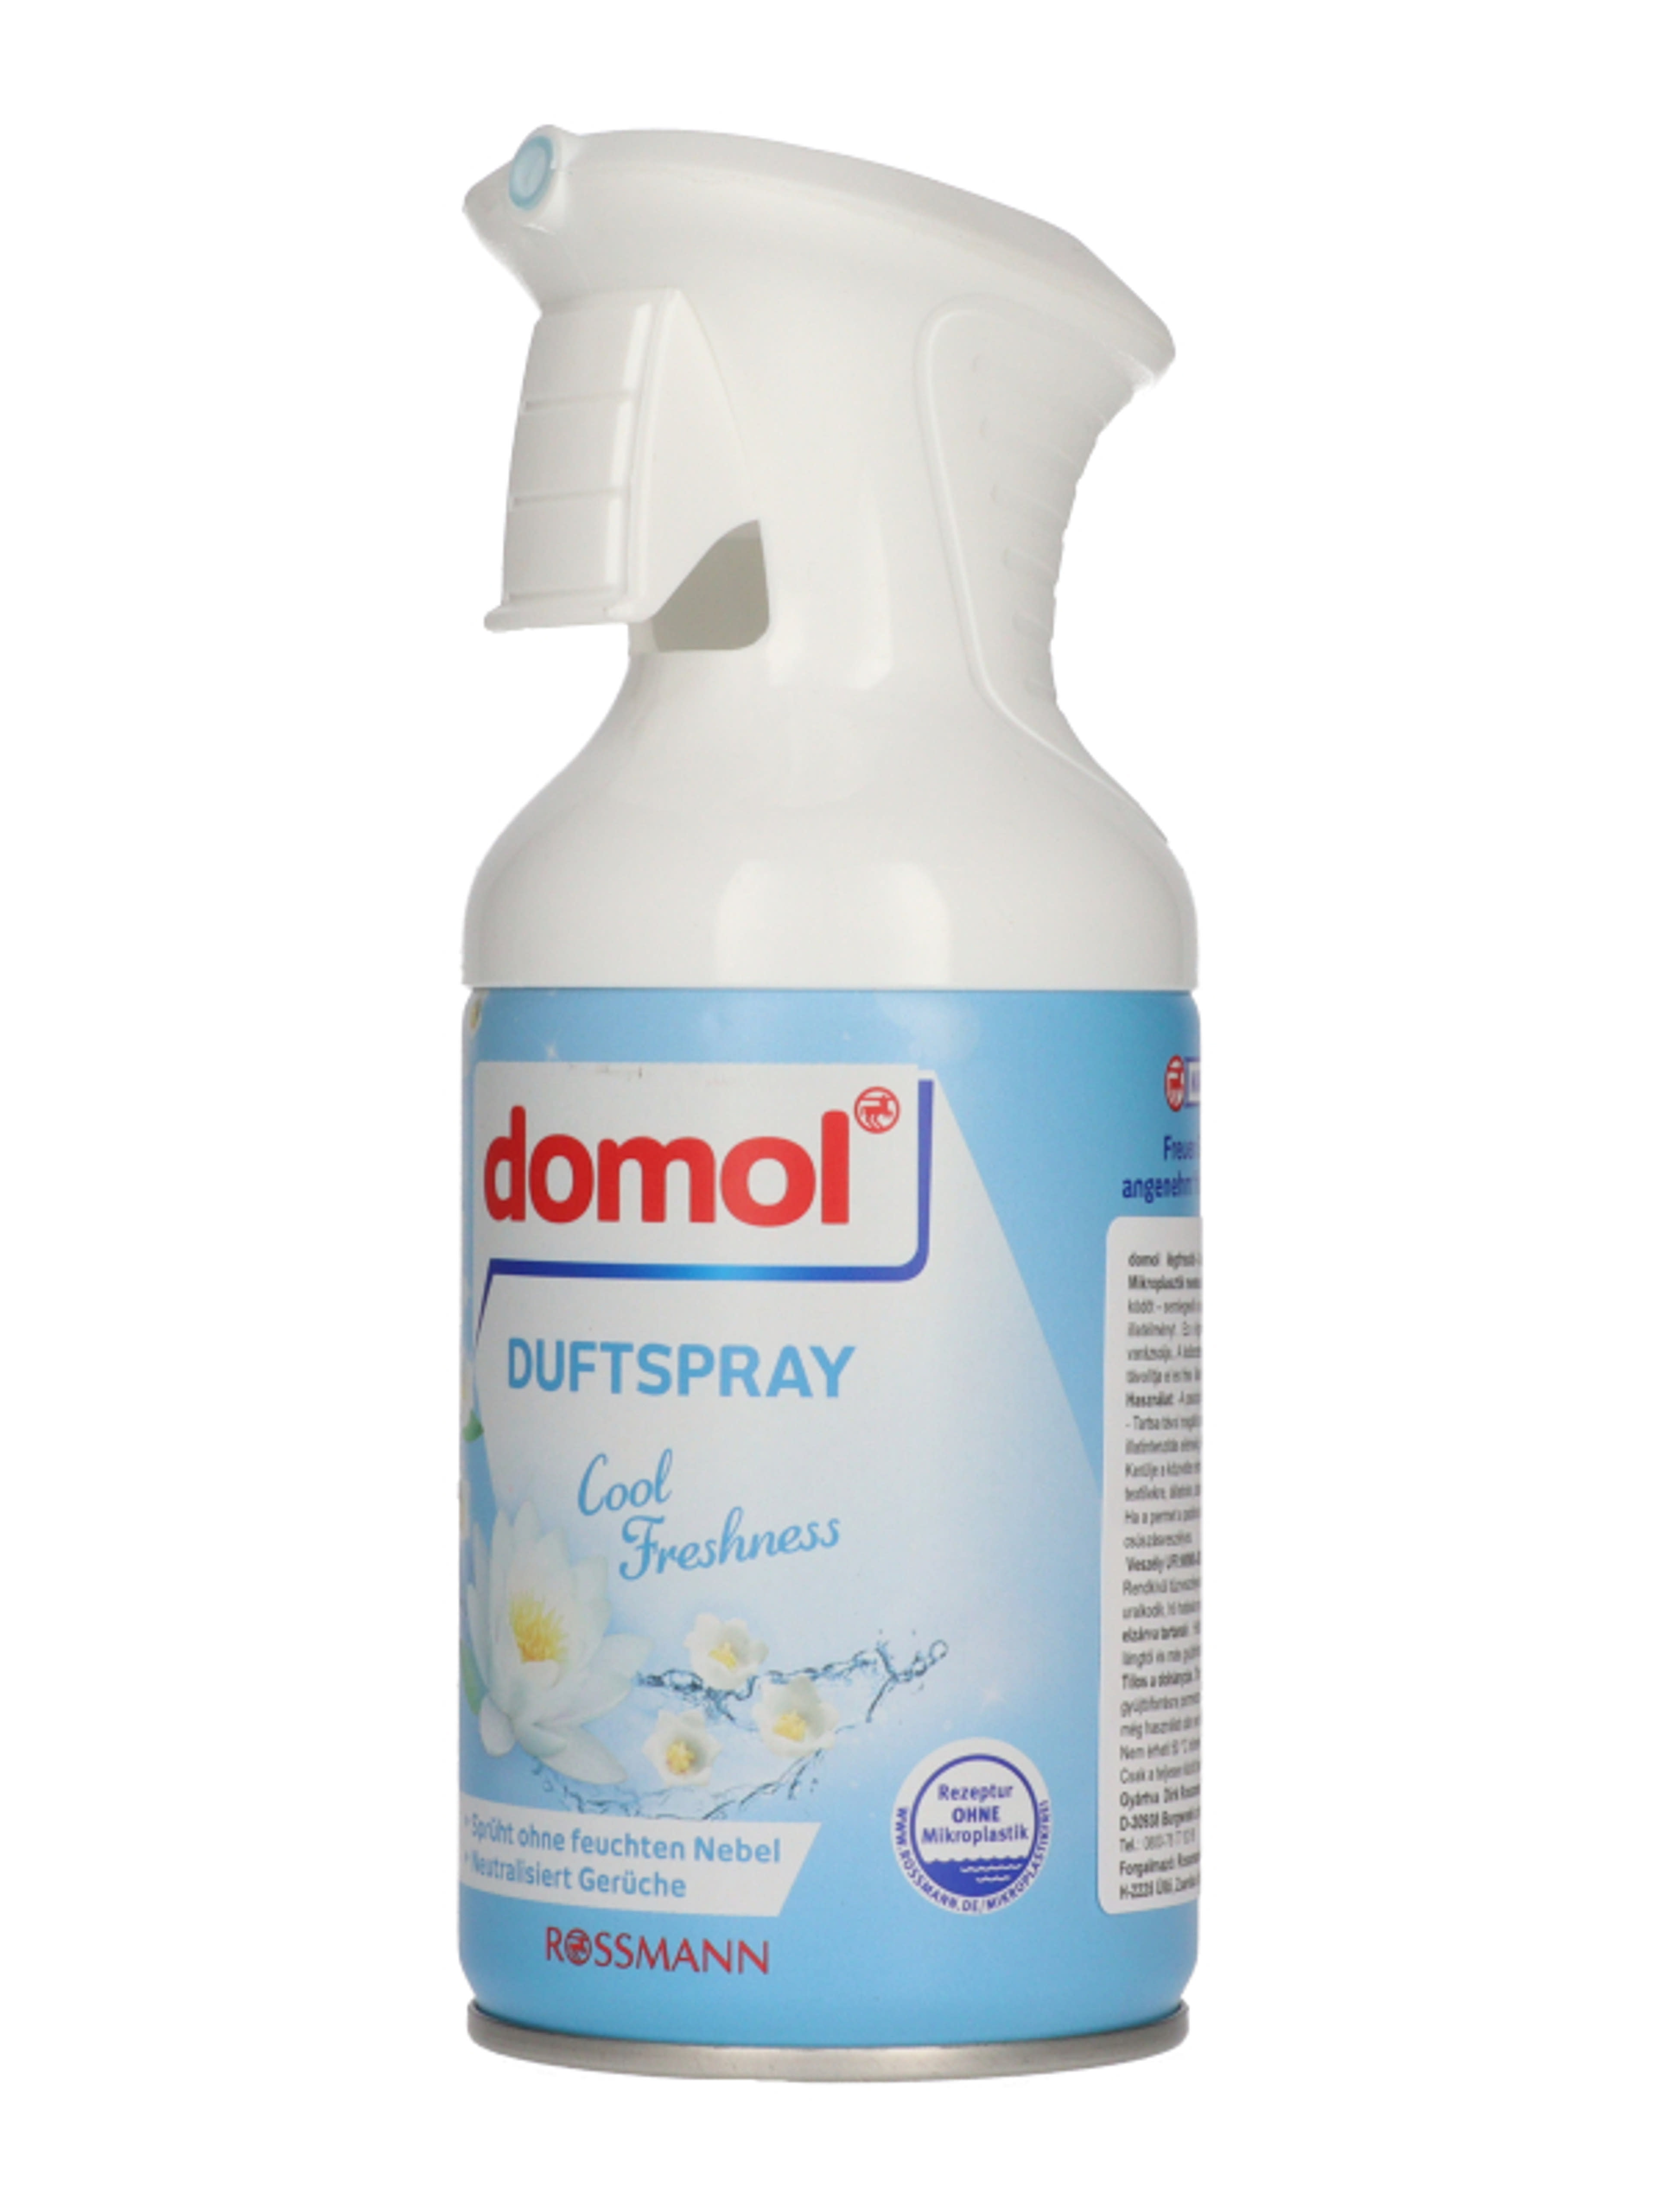 Domol Cool Freshiness légfrissítő spay - 250 ml-3